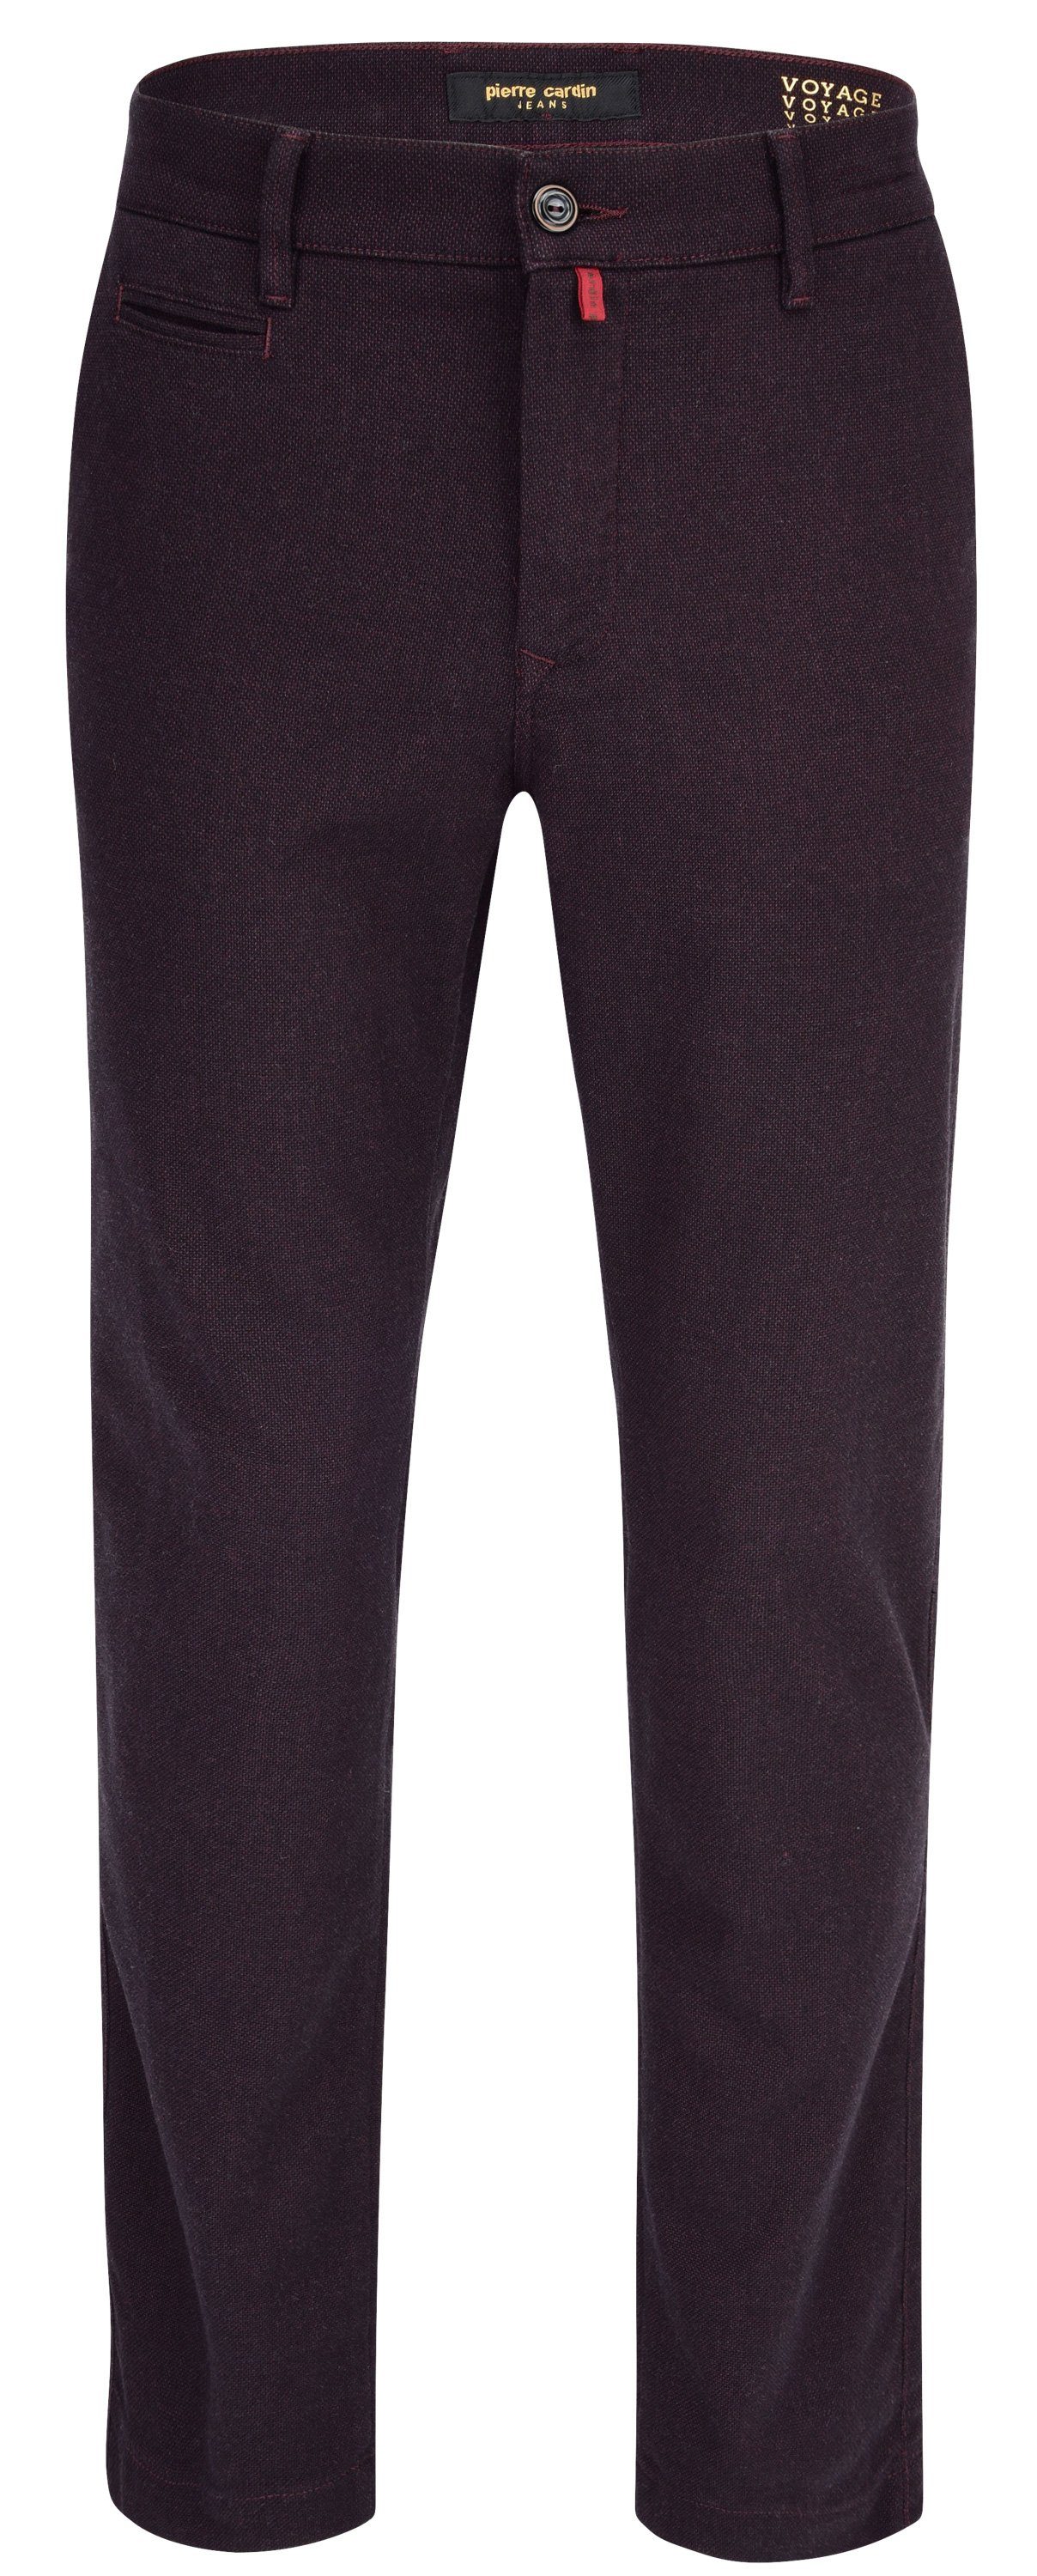 Pierre Cardin 5-Pocket-Jeans PIERRE CARDIN LYON burgundy flannel chino 33747 4745.96 - VOYAGE